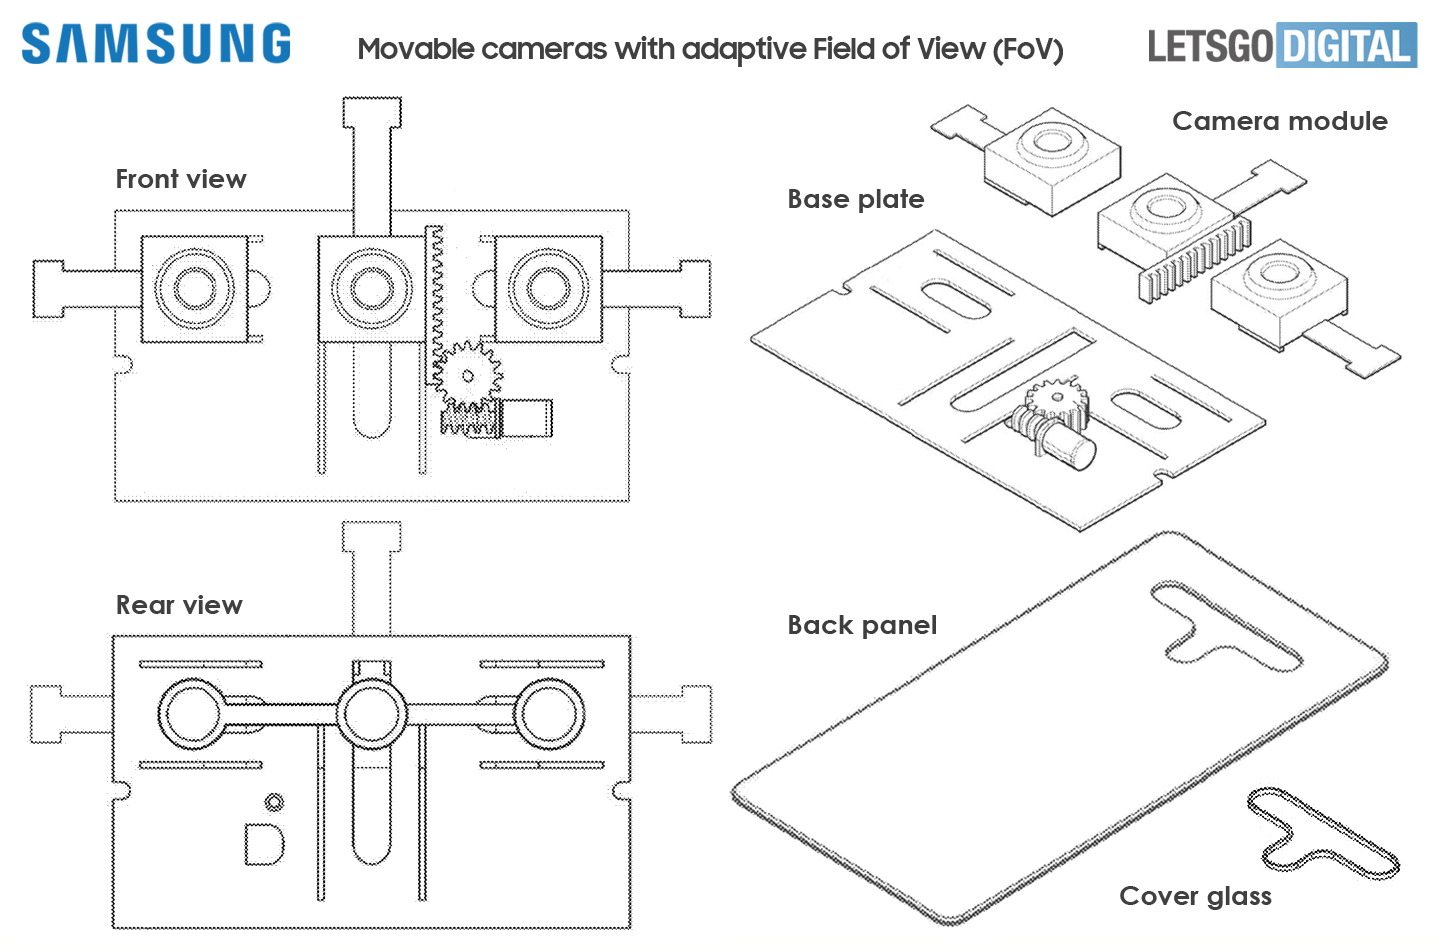 samsung movable camera patent letsgodigital